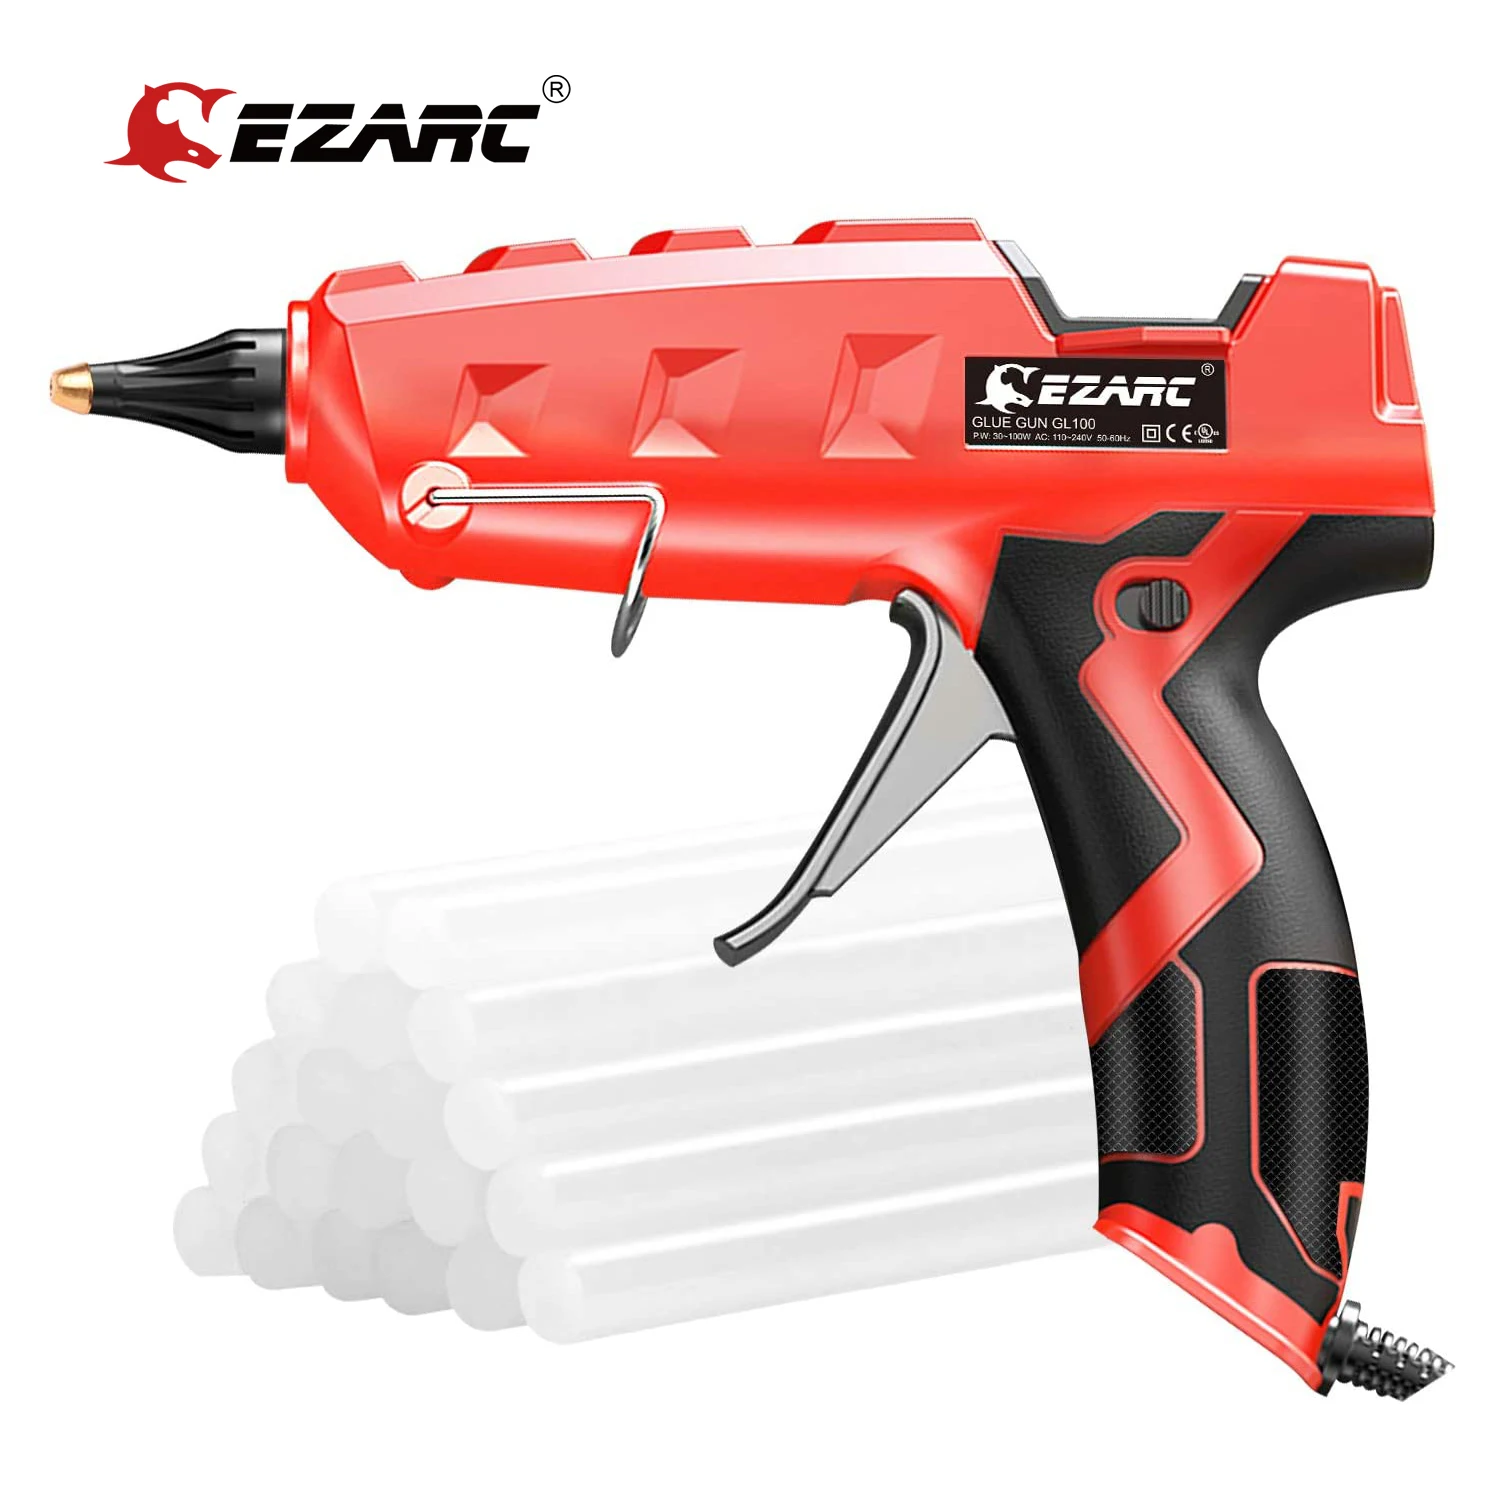 EZARC Hot Melt Glue Gun 100W Heavy Duty Full Size Glue Gun Kit with 20pcs Glue Sticks, for DIY, Arts & Crafts Projects, Sealing projects